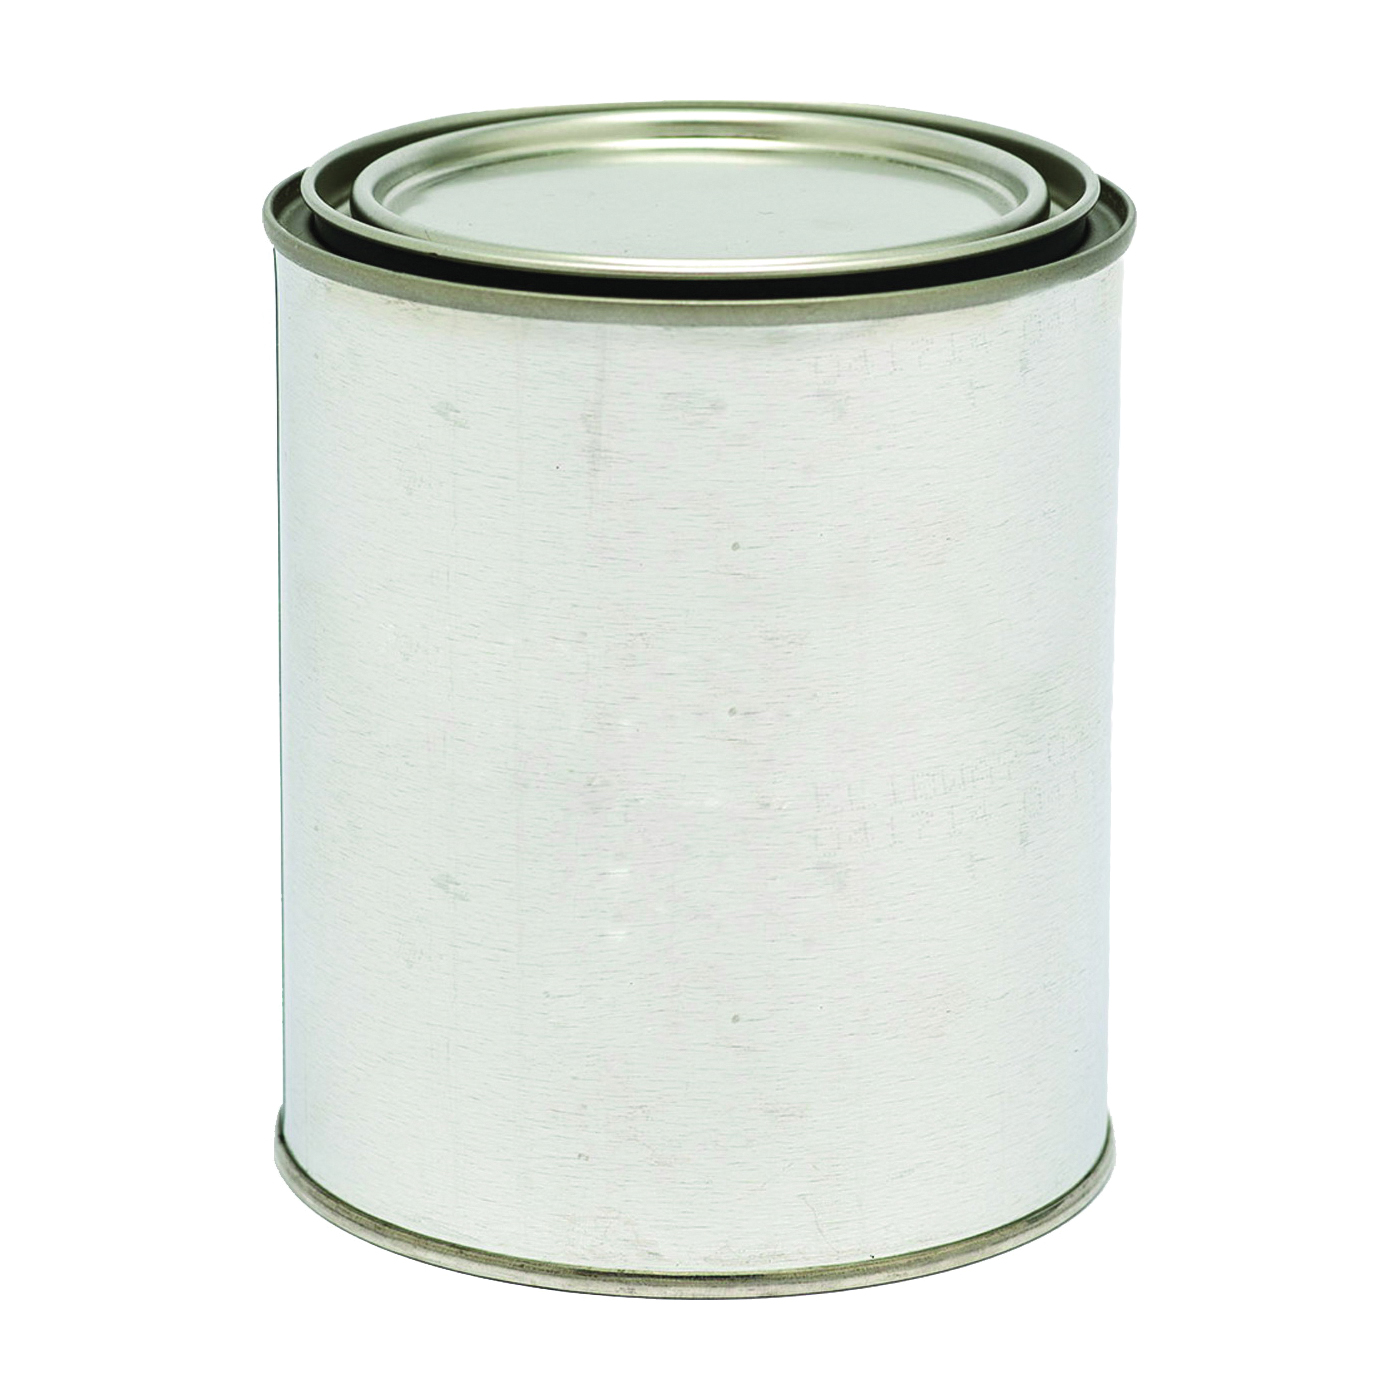 Valspar 27318 Empty Paint Can, 1 qt Capacity, Metal, Silver - 1